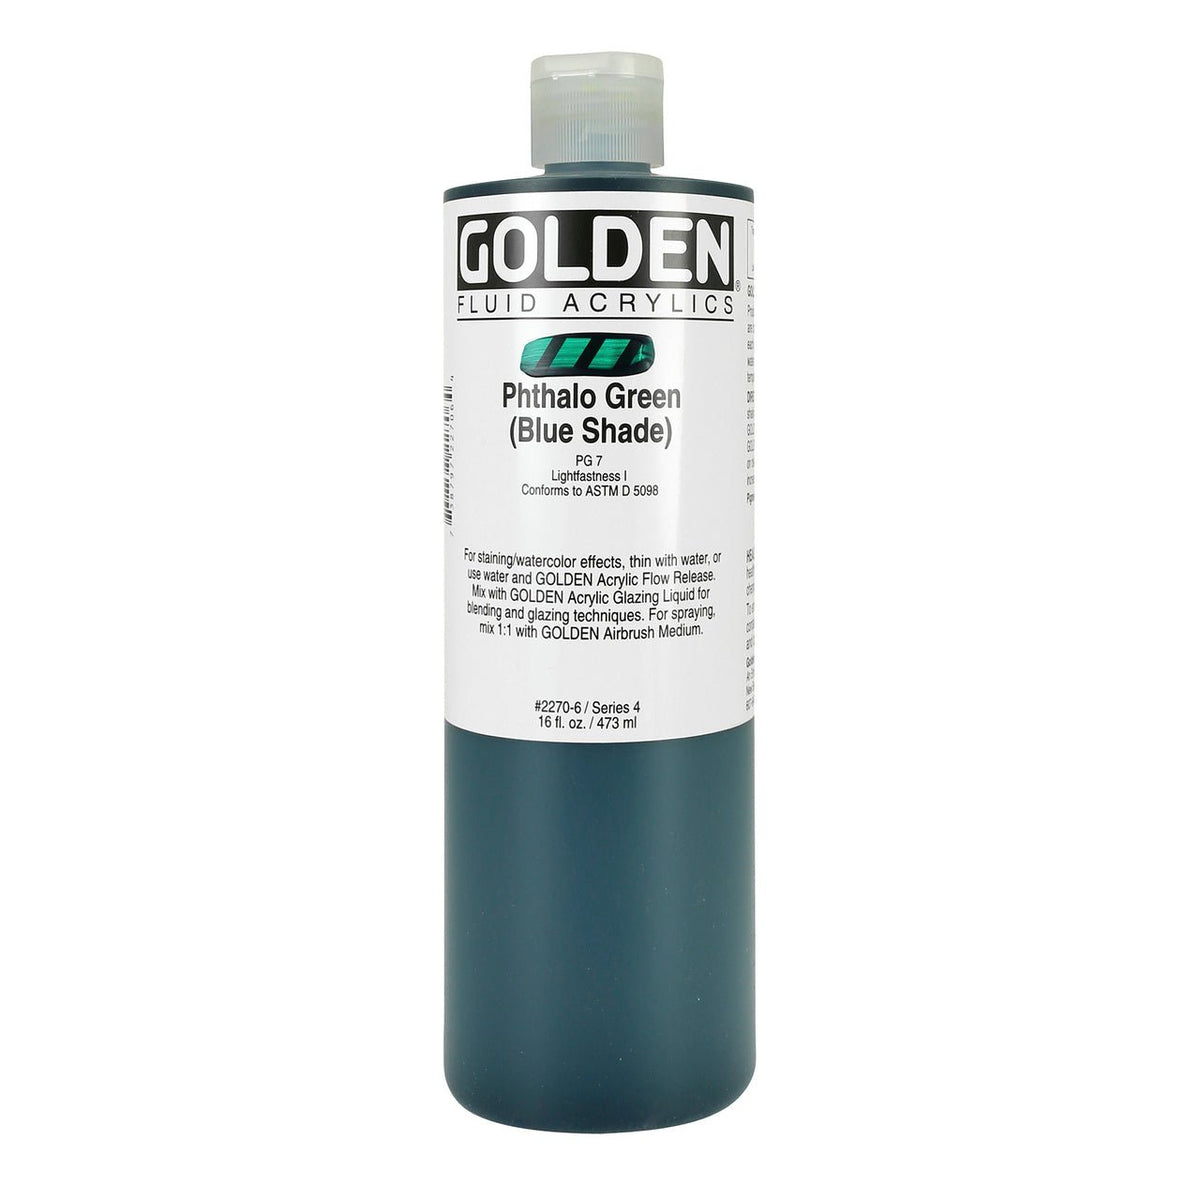 Golden Fluid Acrylic Phthalo Green (blue shade) 16 oz - merriartist.com